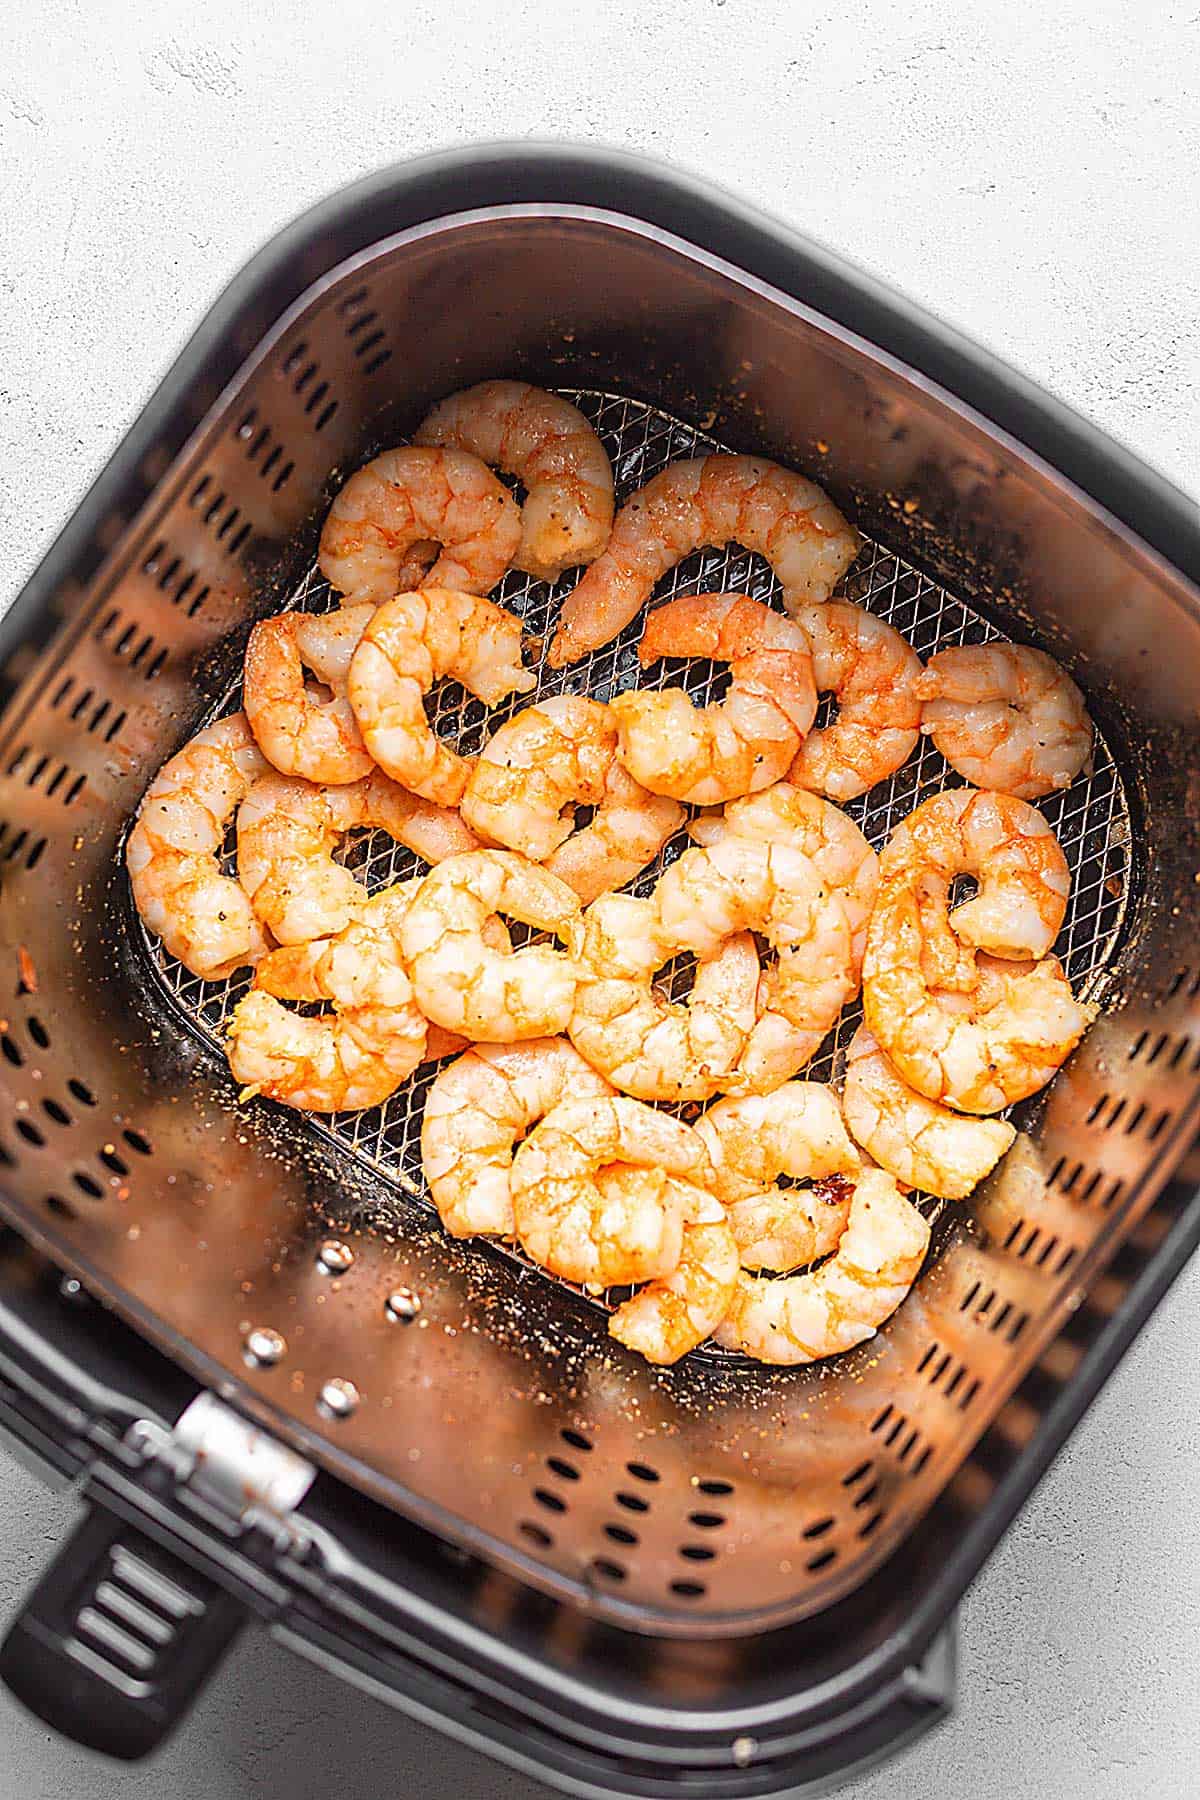 shrimp in an air fryer basket